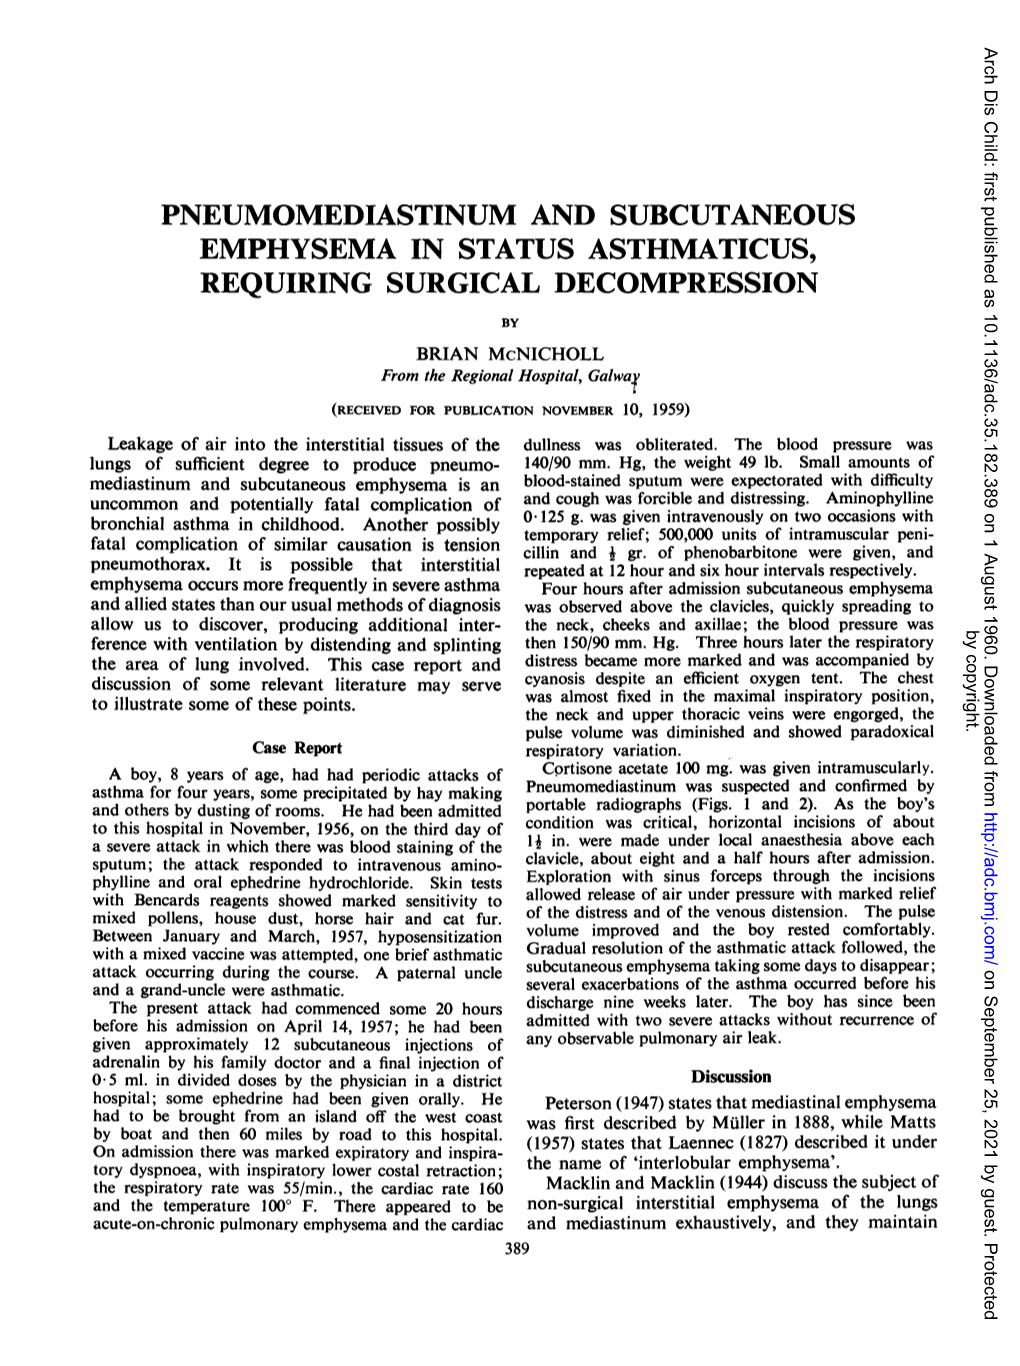 Pneumomediastinum and Subcutaneous Emphysema in Status Asthmaticus, Requiring Surgical Decompression